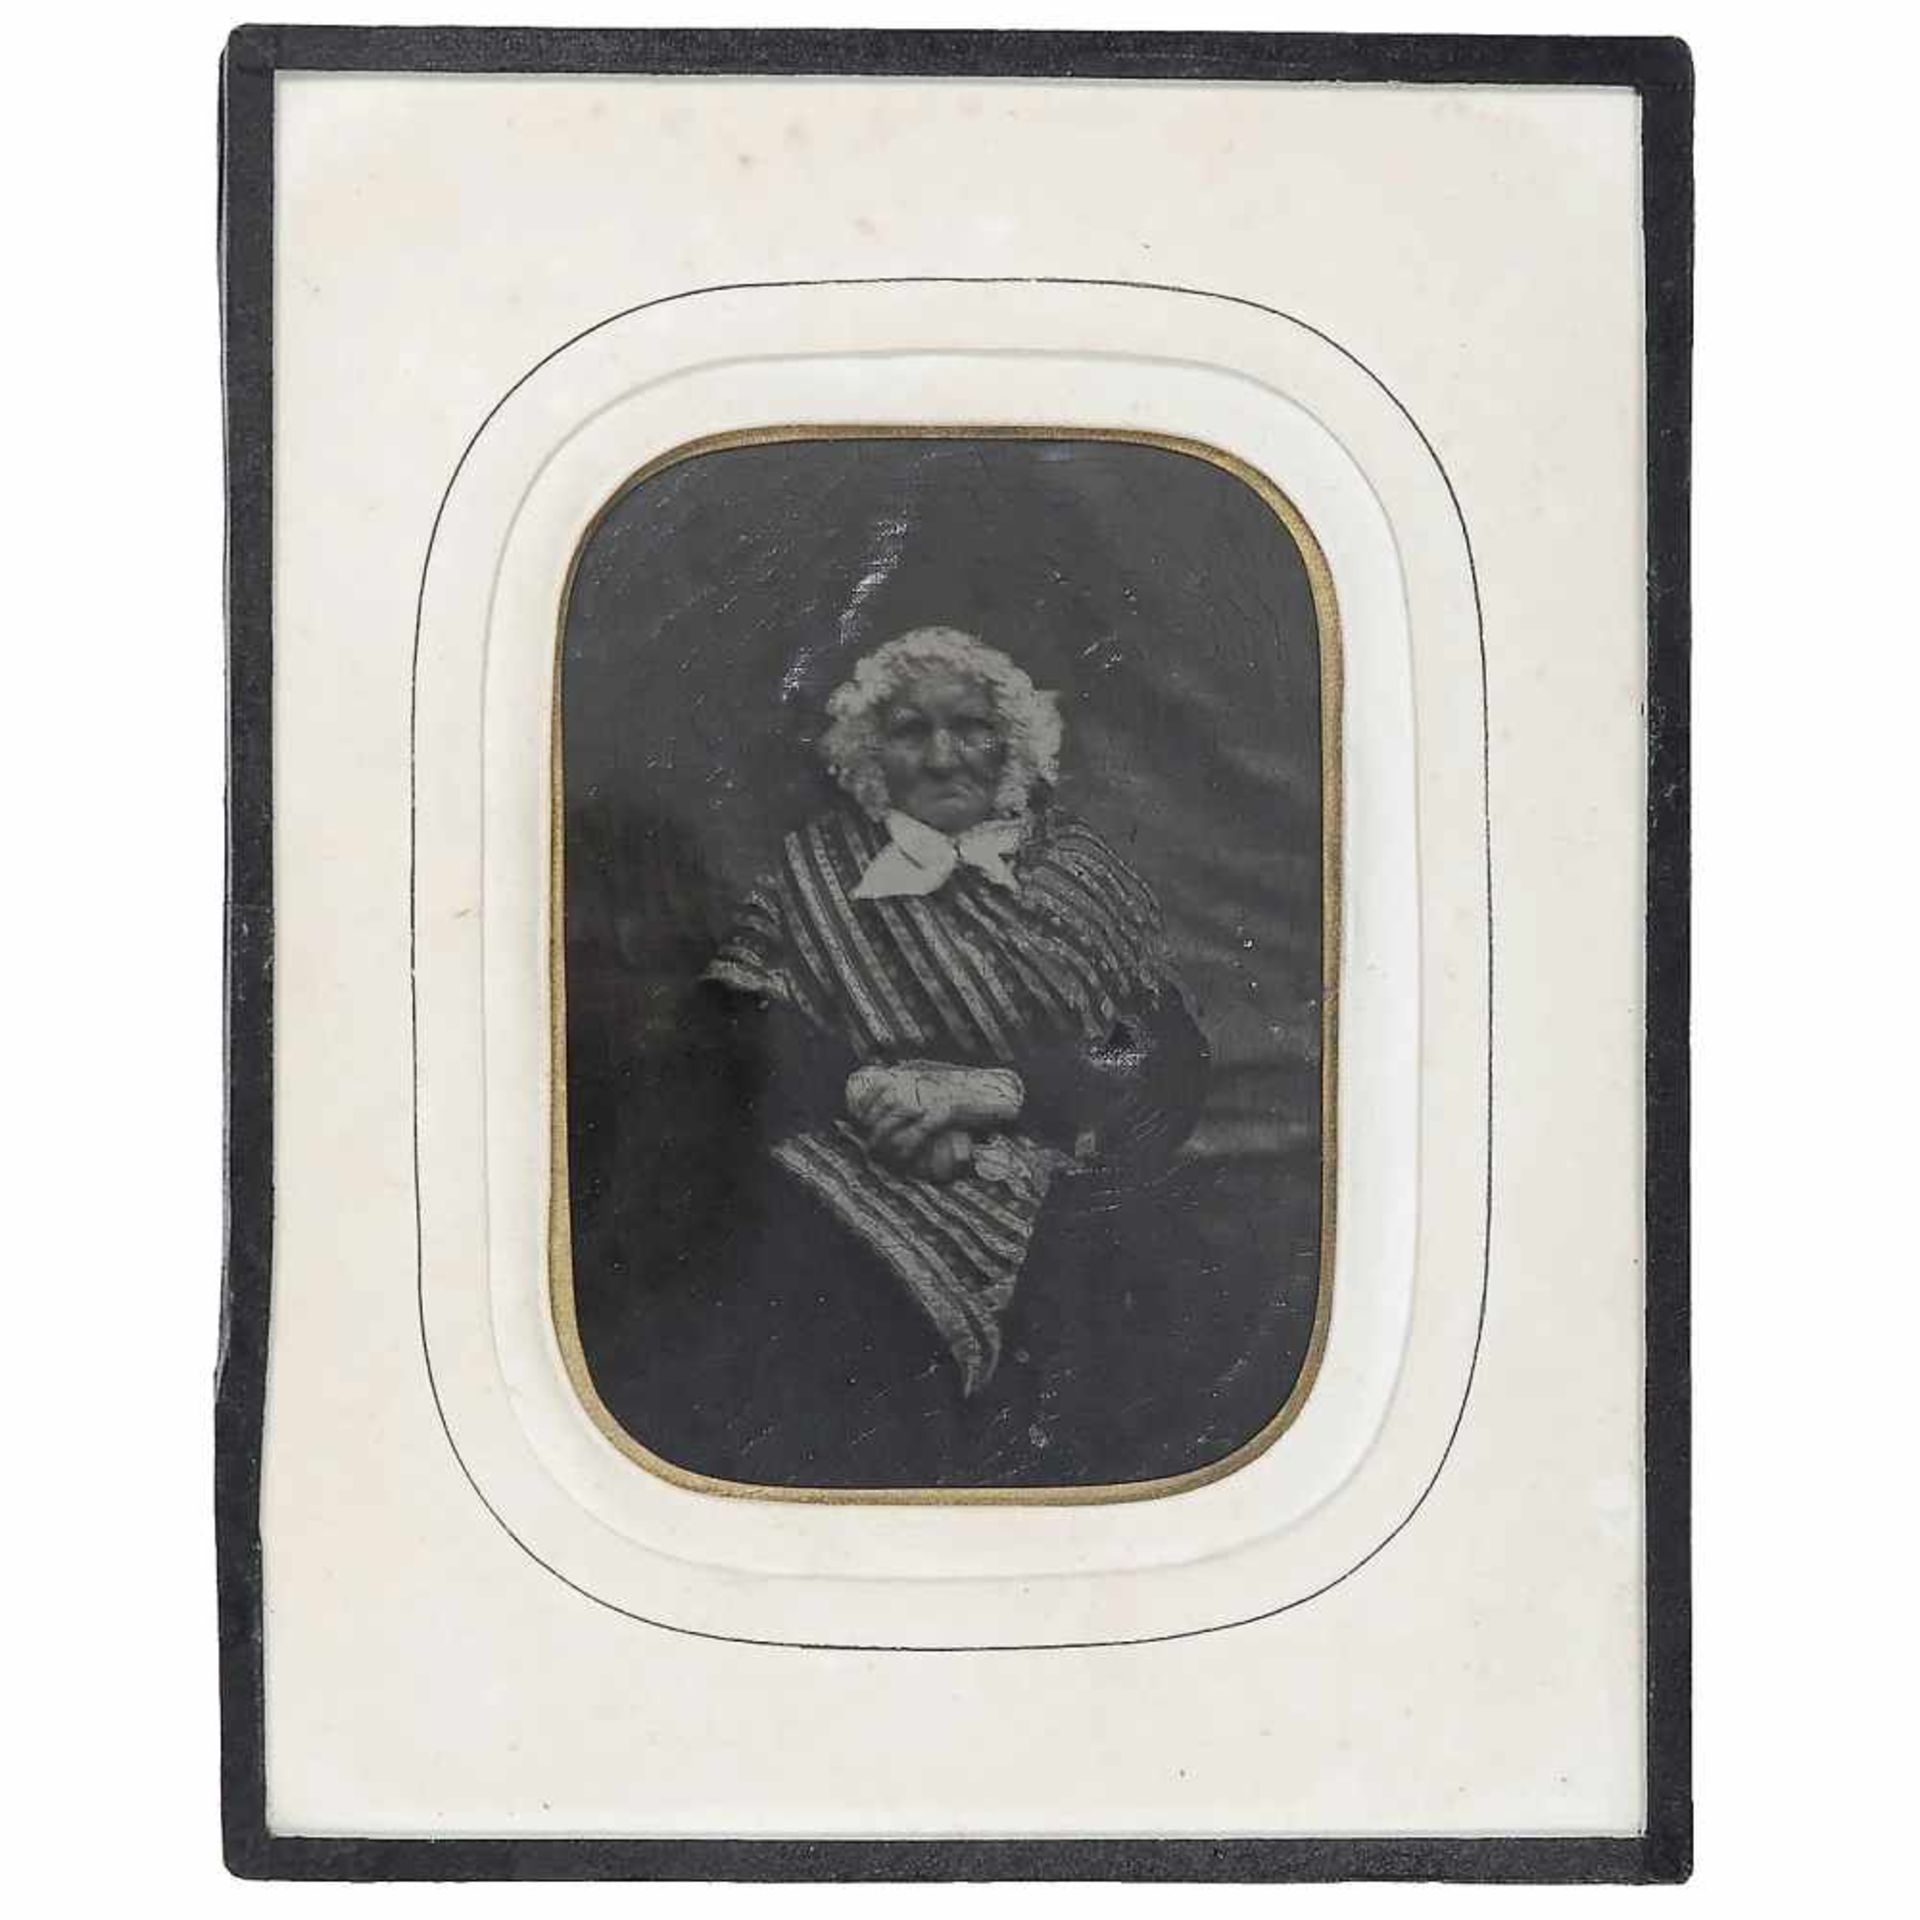 Pannotype Half Plate, 1853-60